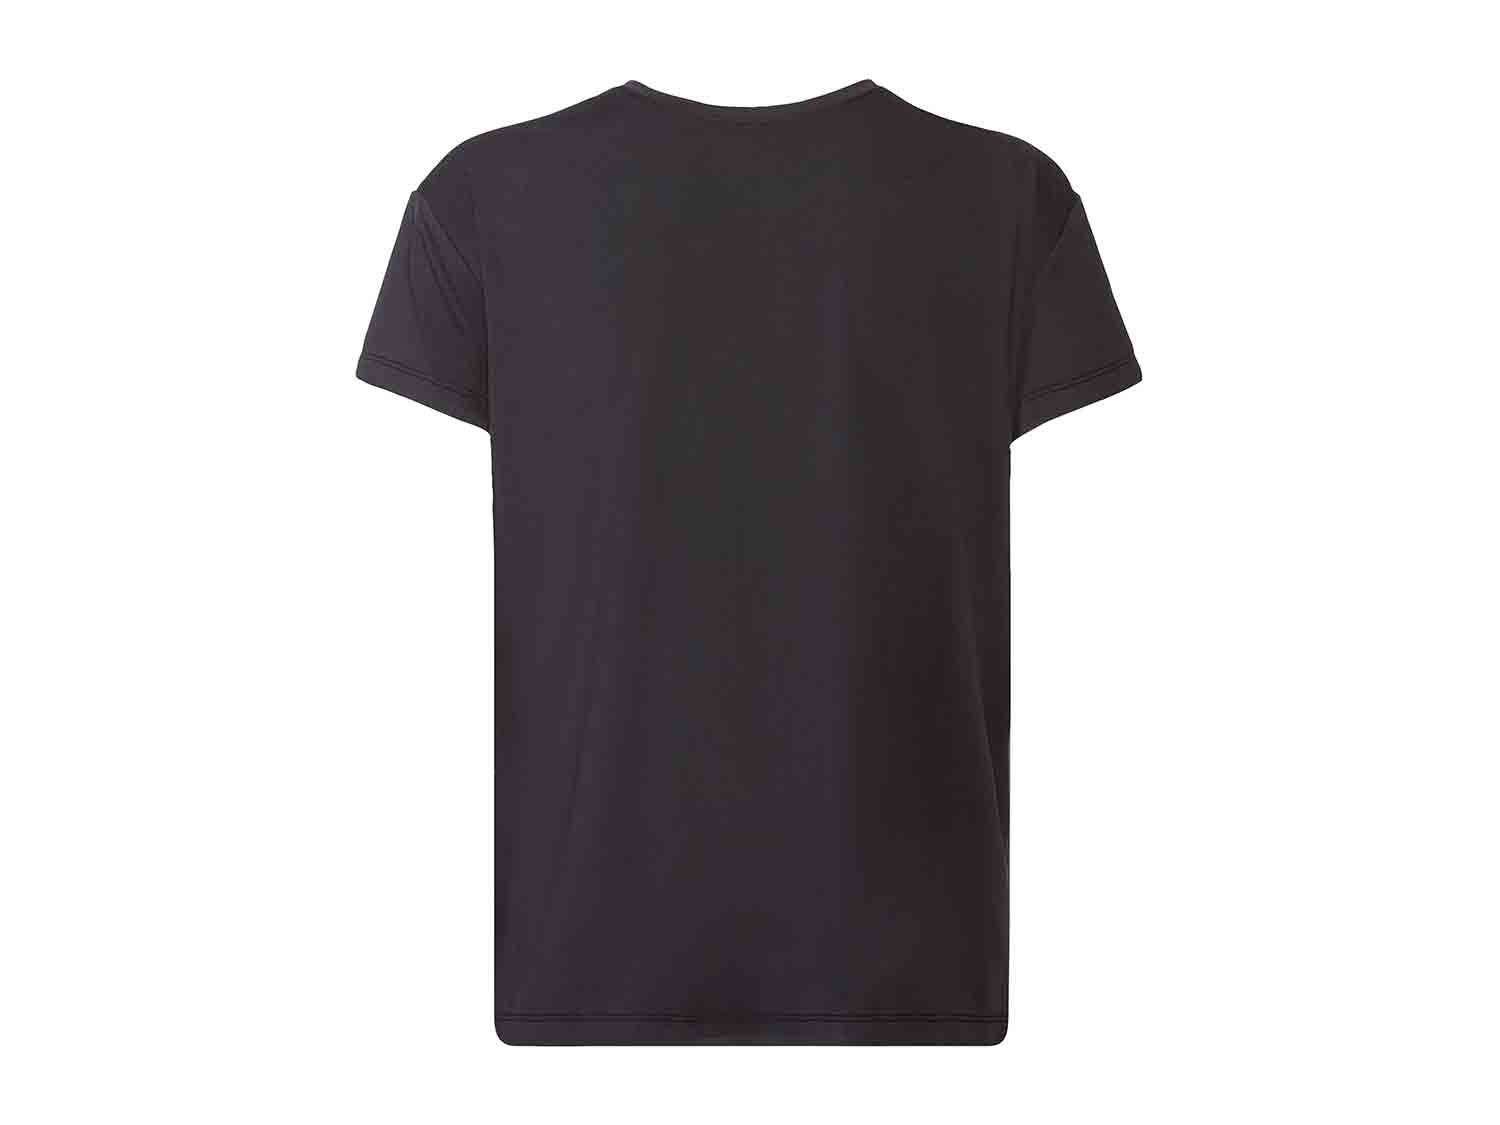 Alianza Cambiarse de ropa Deducir Camiseta técnica negra de manga corta para mujer | Lidl